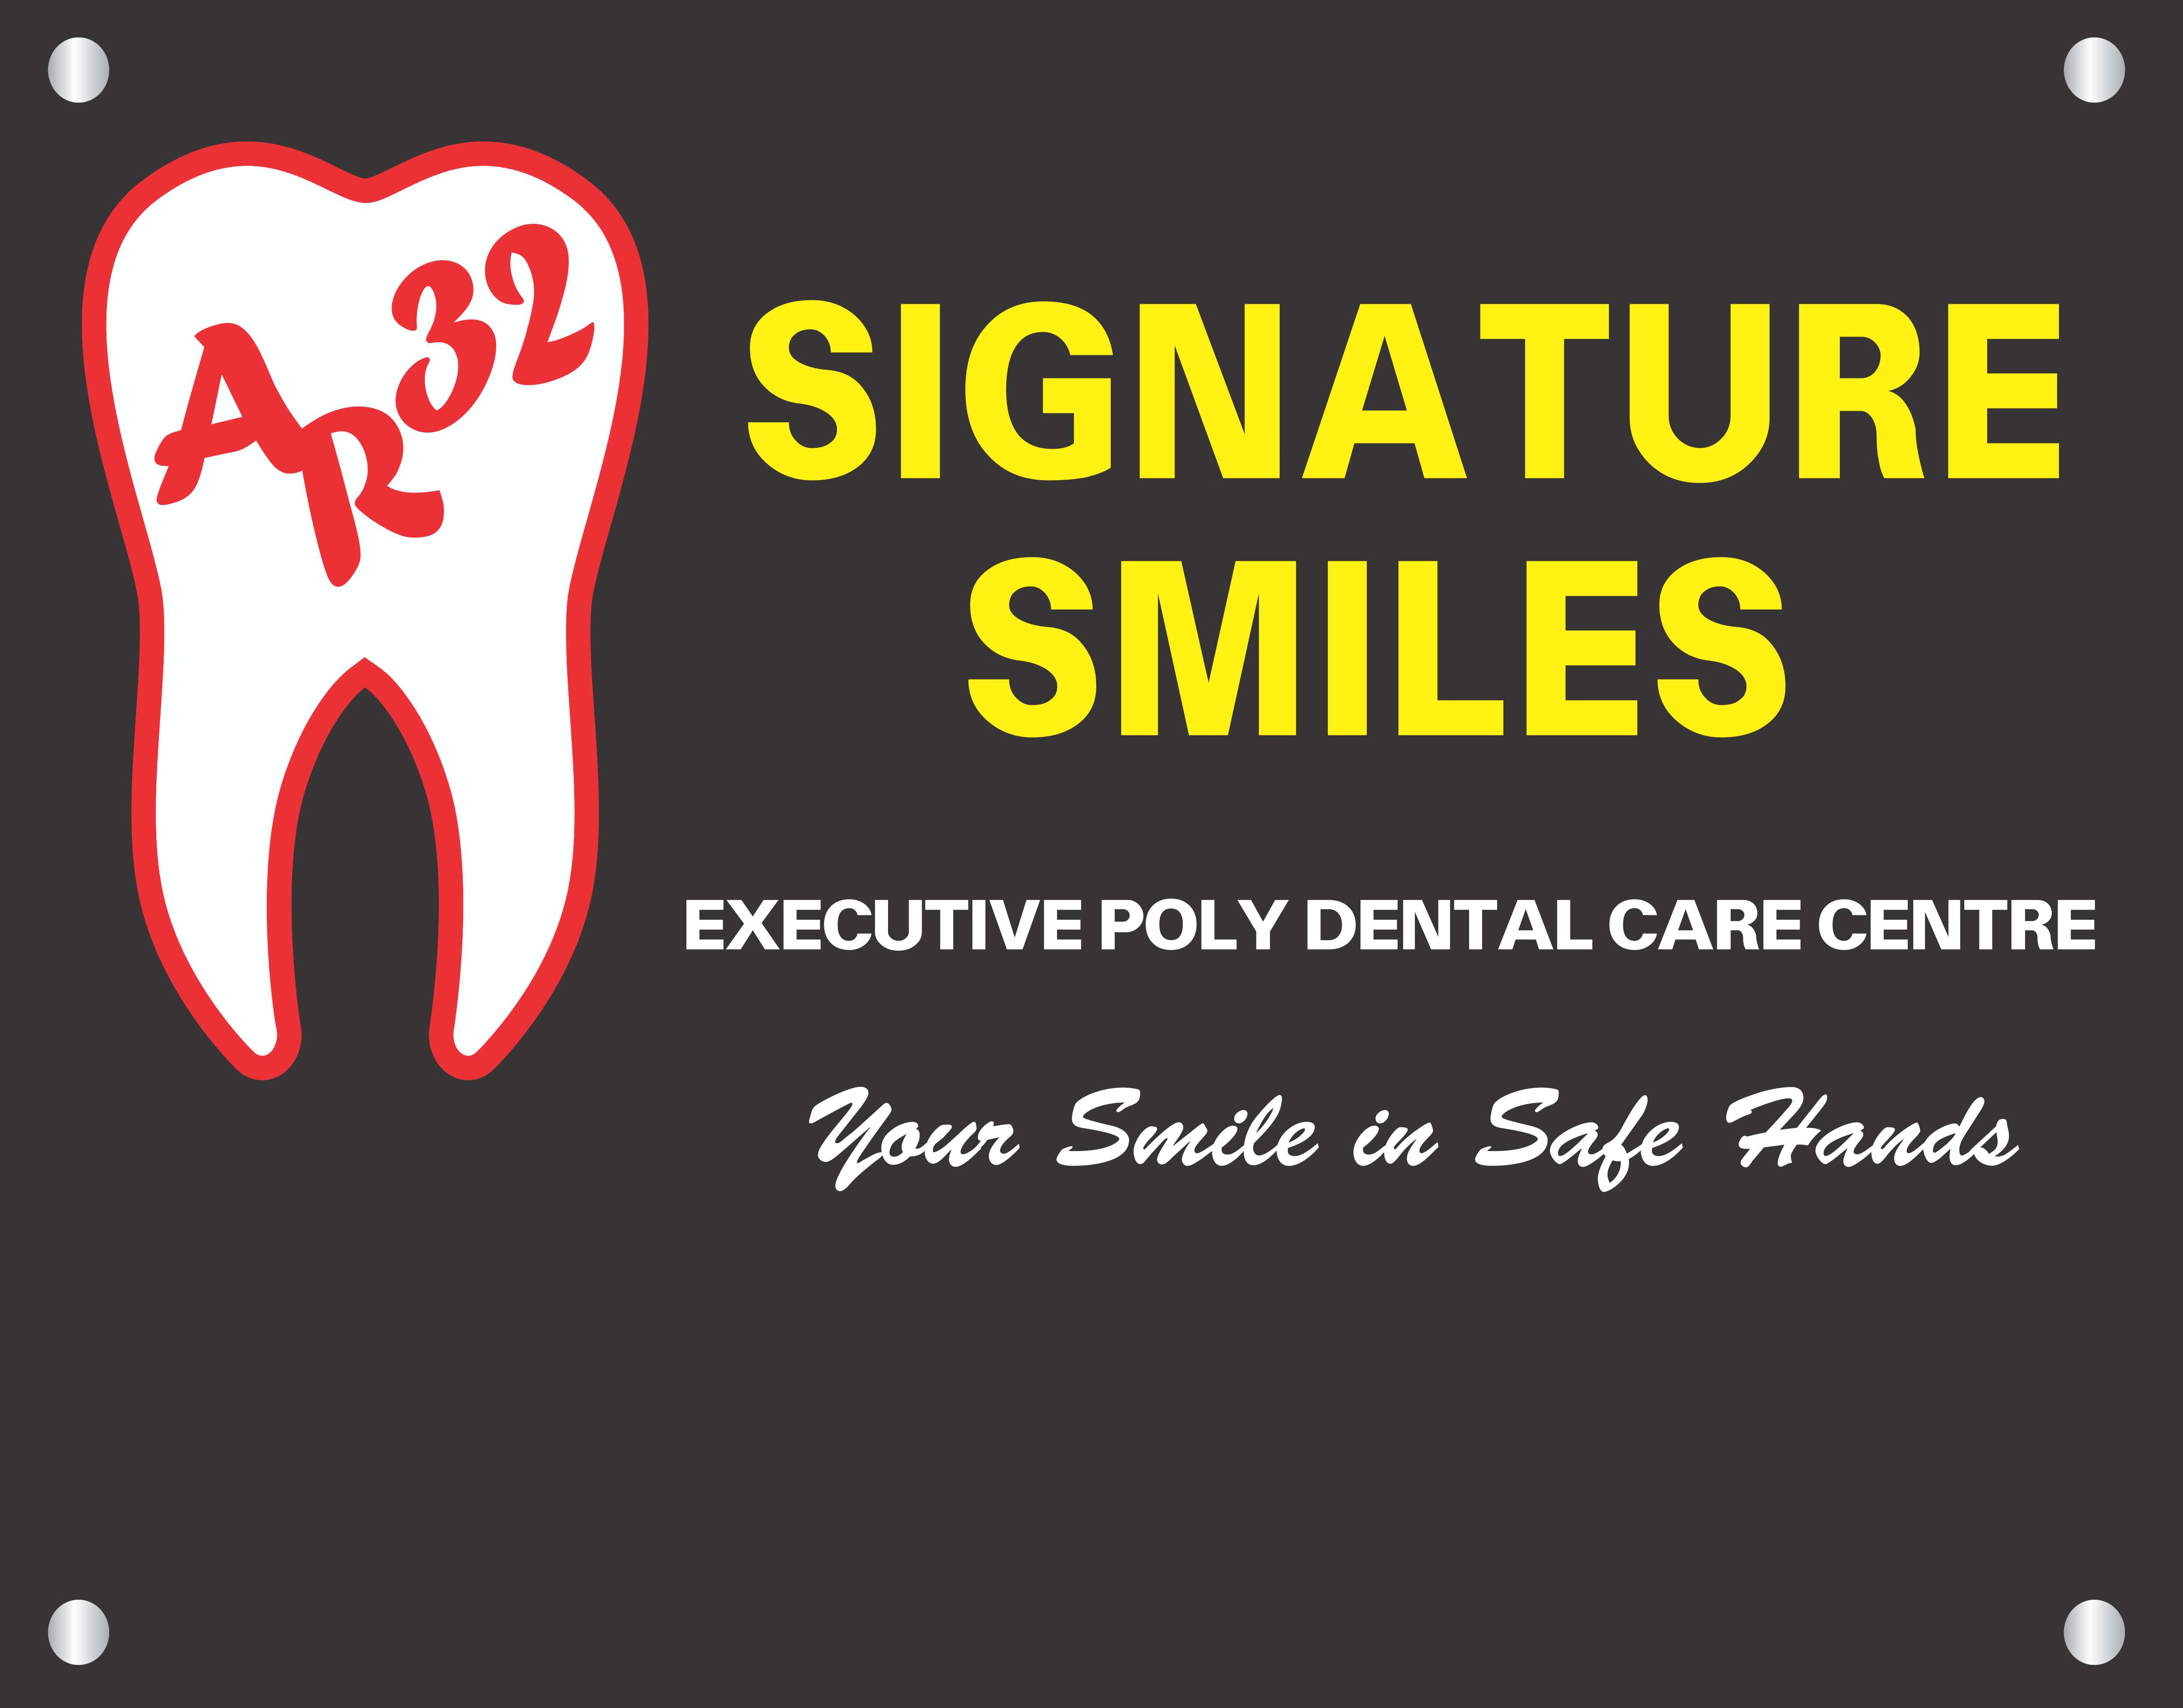 AR 32 Signature Smiles Dental Clinic|Clinics|Medical Services